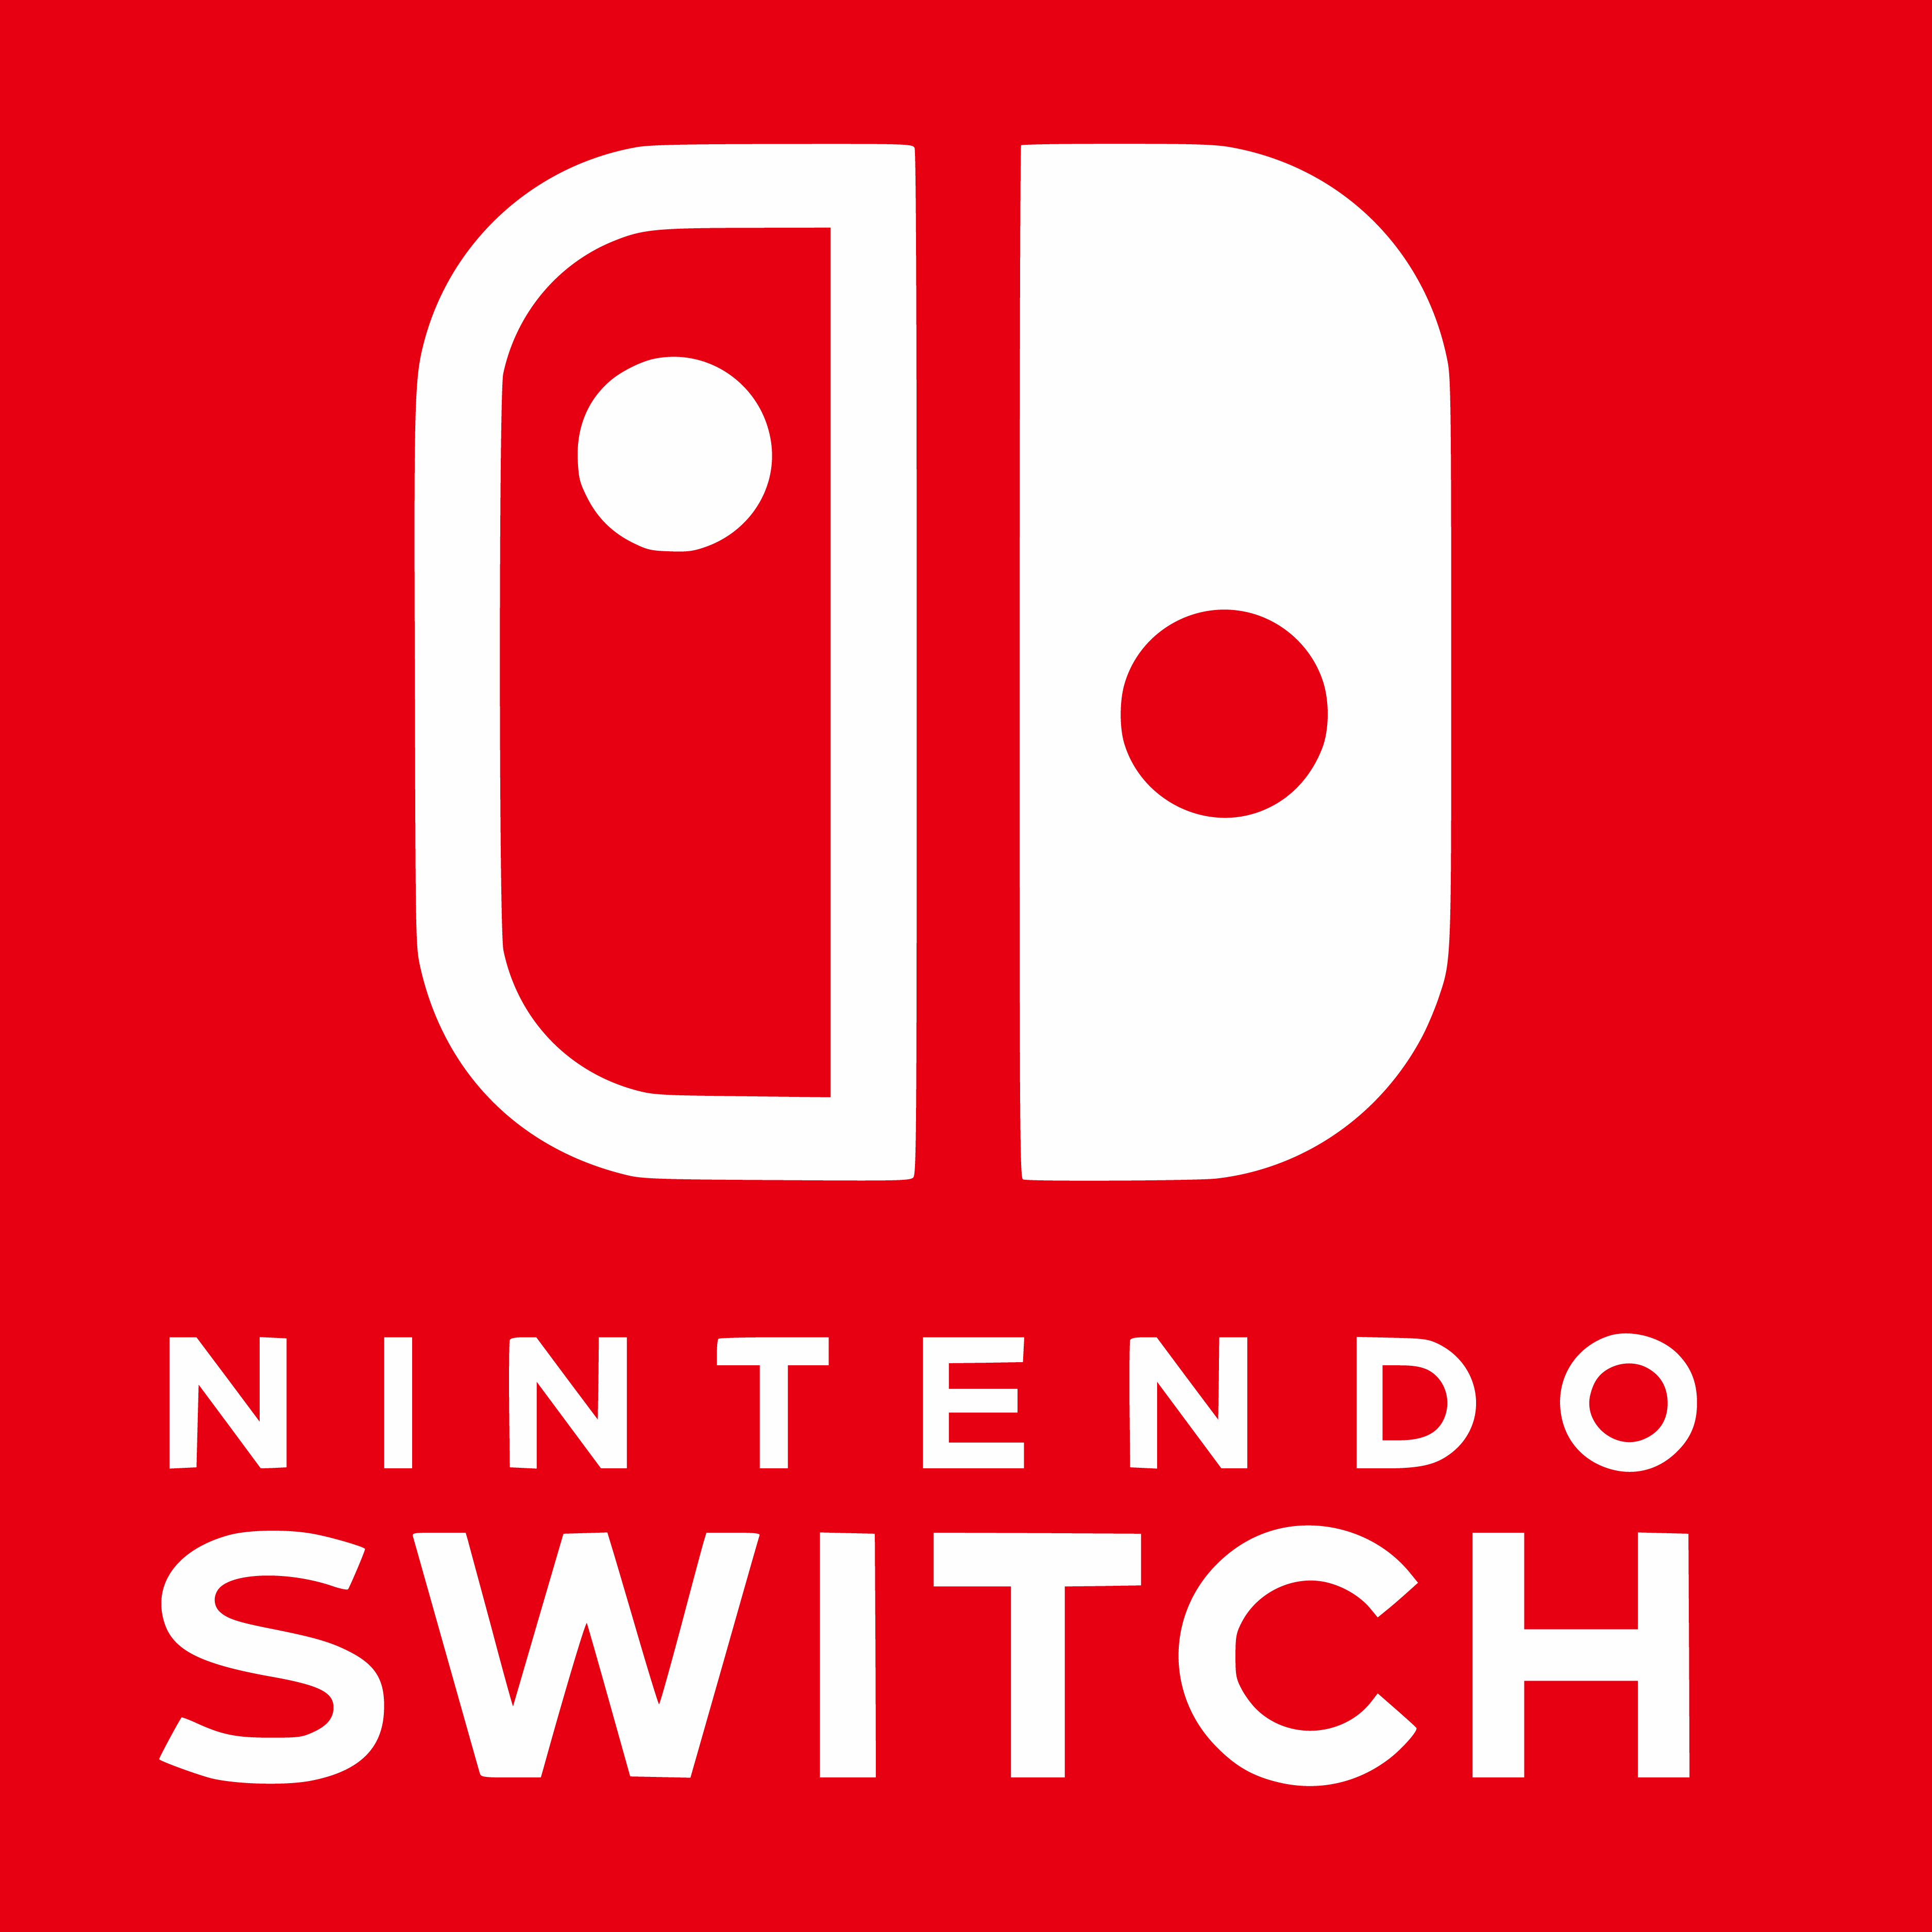 The Nintendo Switch 